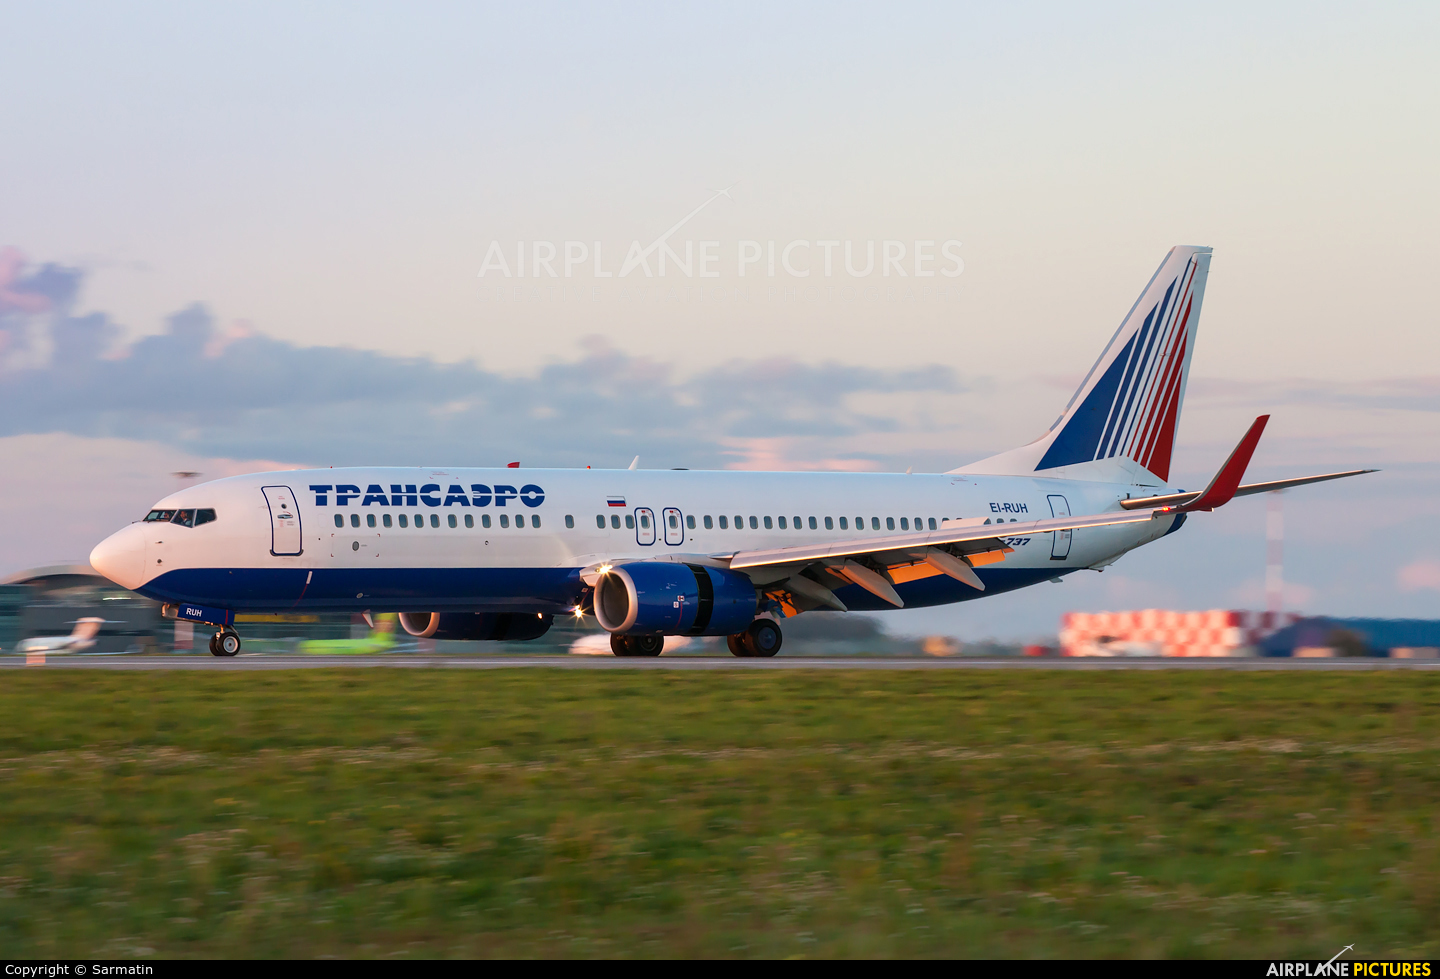 Transaero Airlines EI-RUH aircraft at Kazan